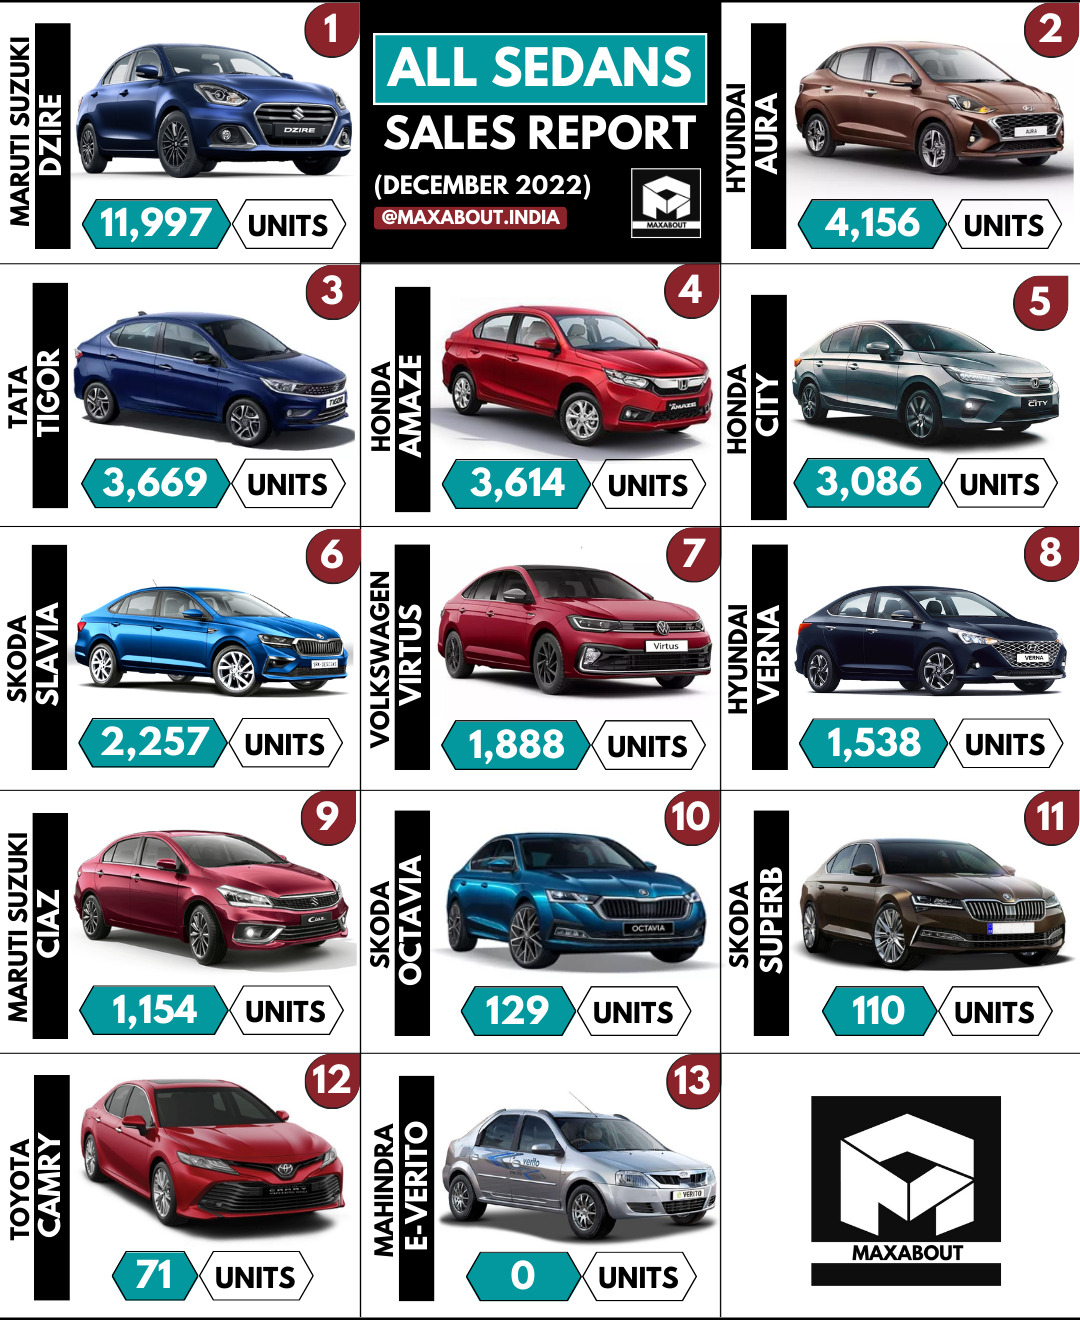 Tata Tigor Beats Honda Amaze! (Sedans Sales Report -December 2022)